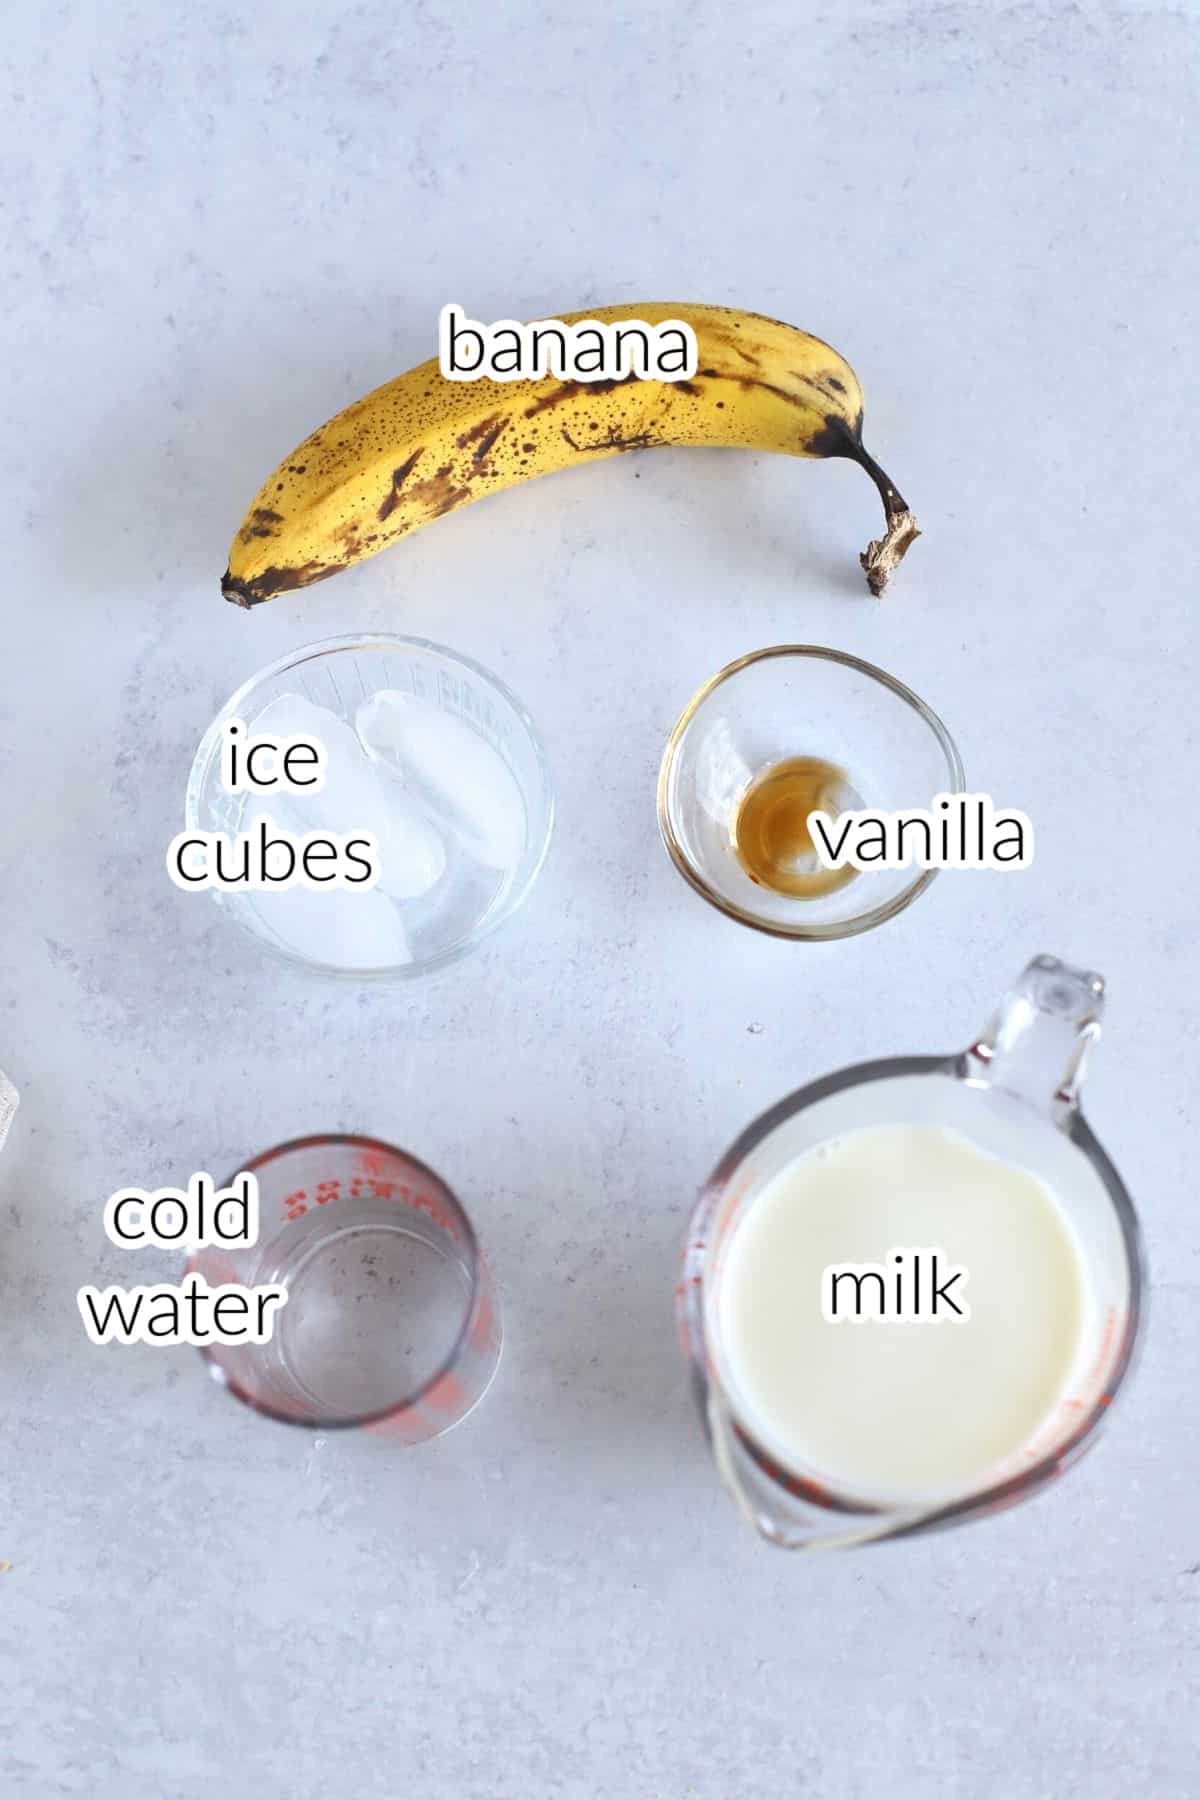 Banana milk ingredients on a countertop.